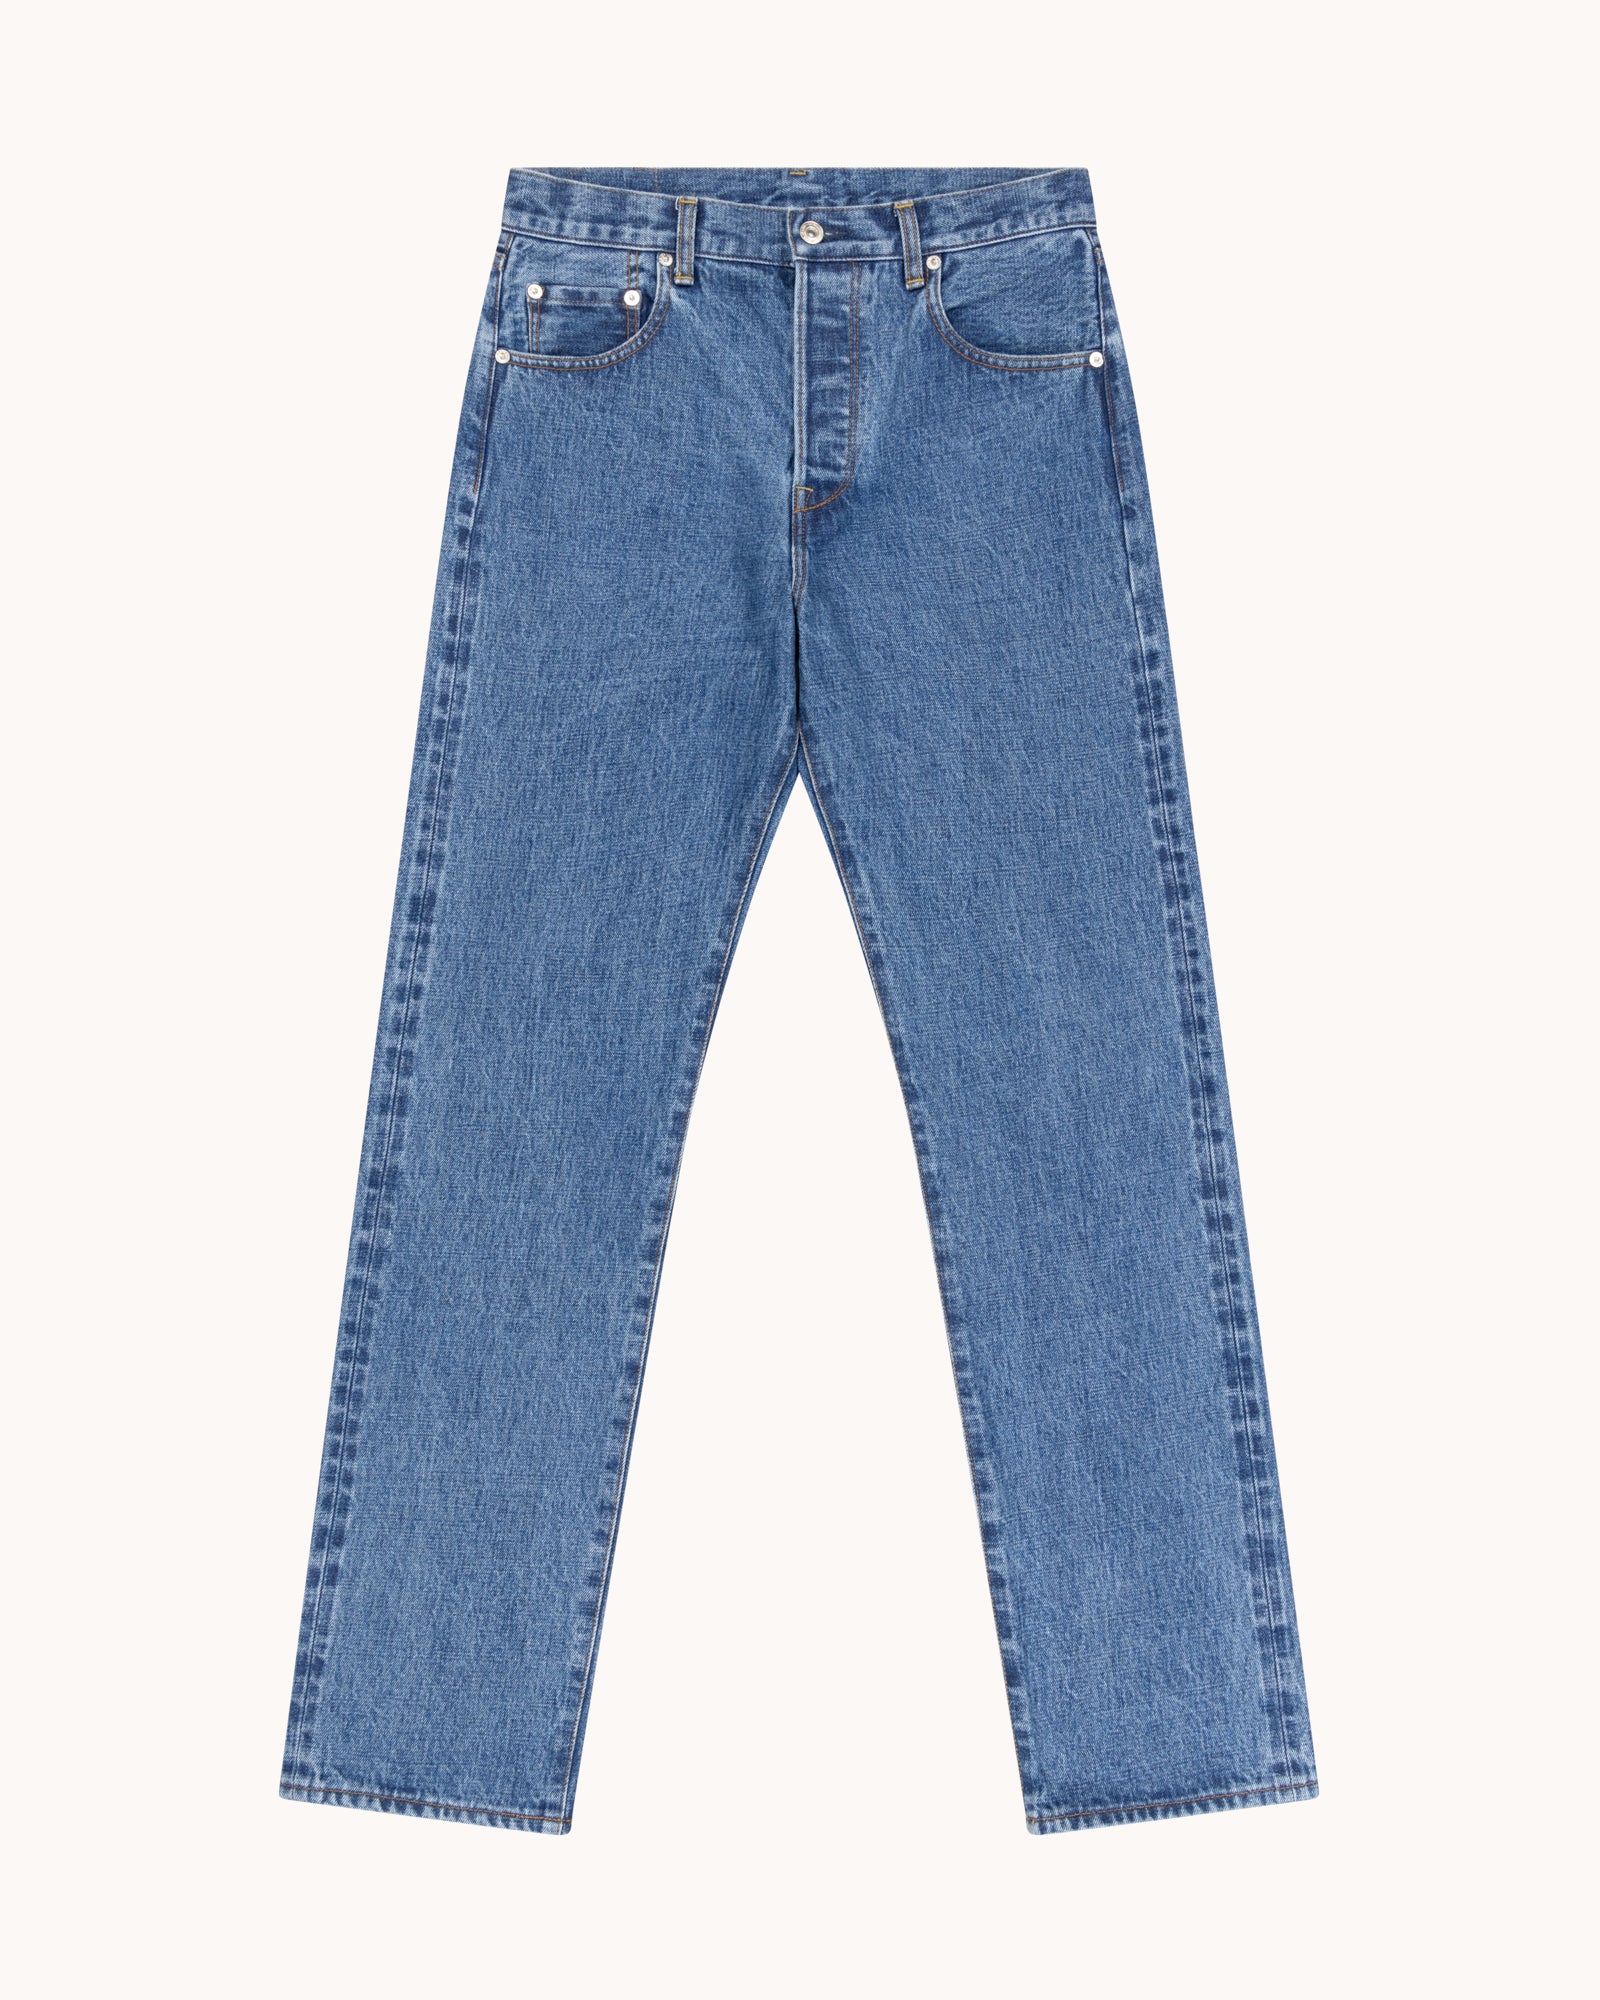 Selvedge jeans premium - Jeansverket shop